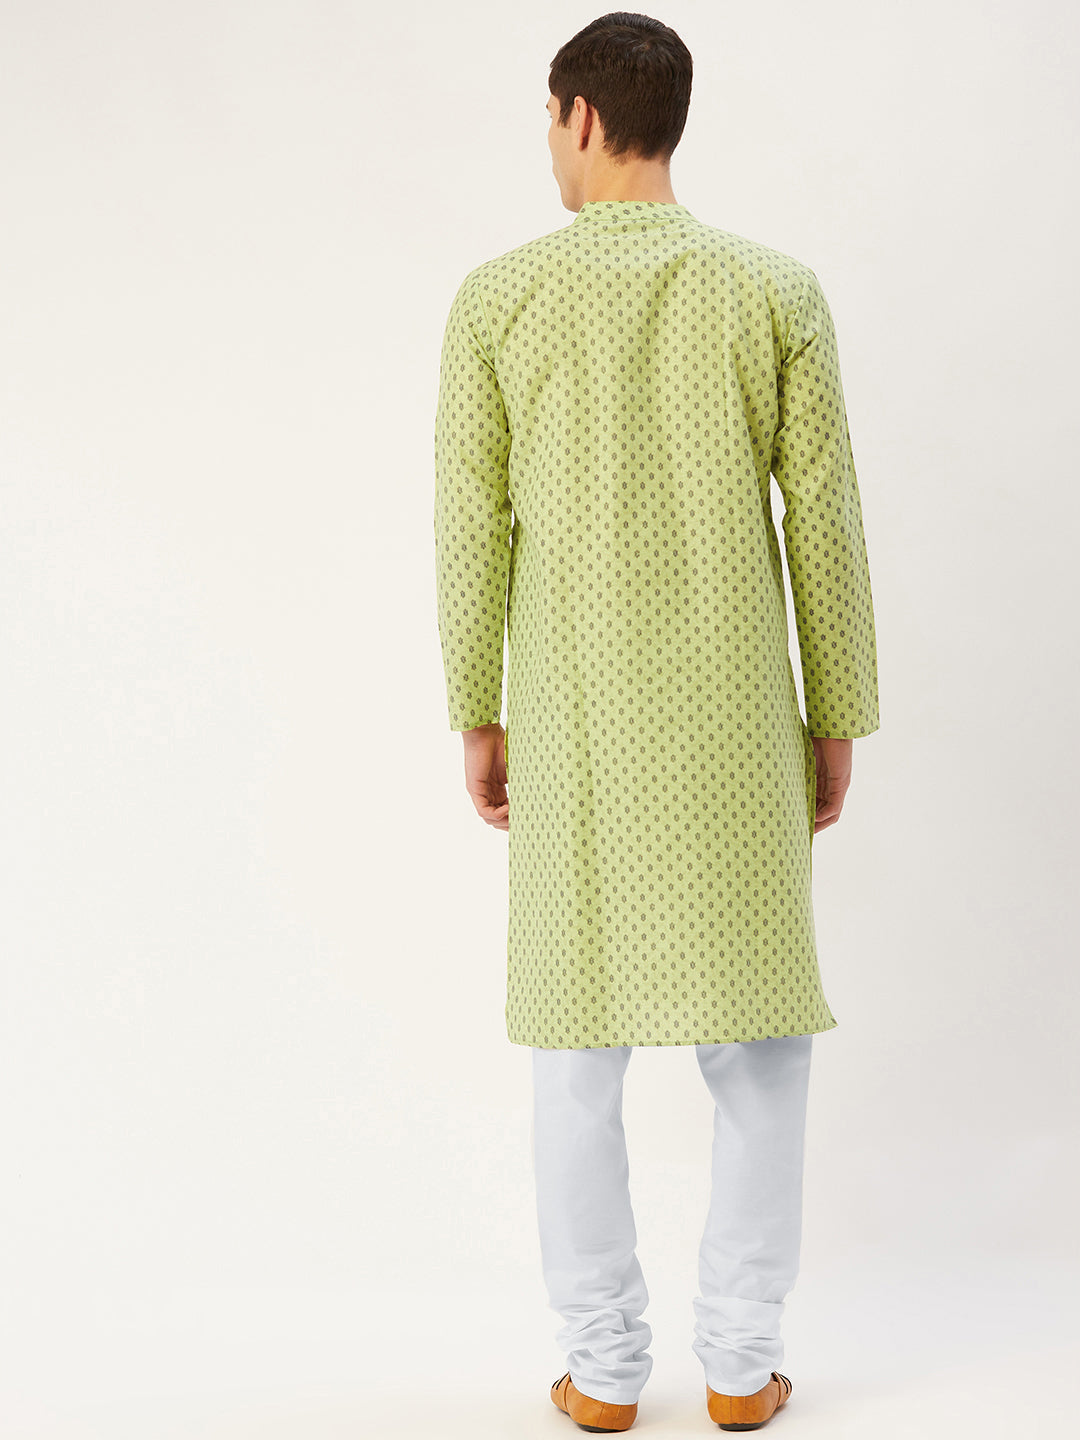 Men's Green Cotton printed kurta Only( KO 652 Green ) - Final Clearance Sale